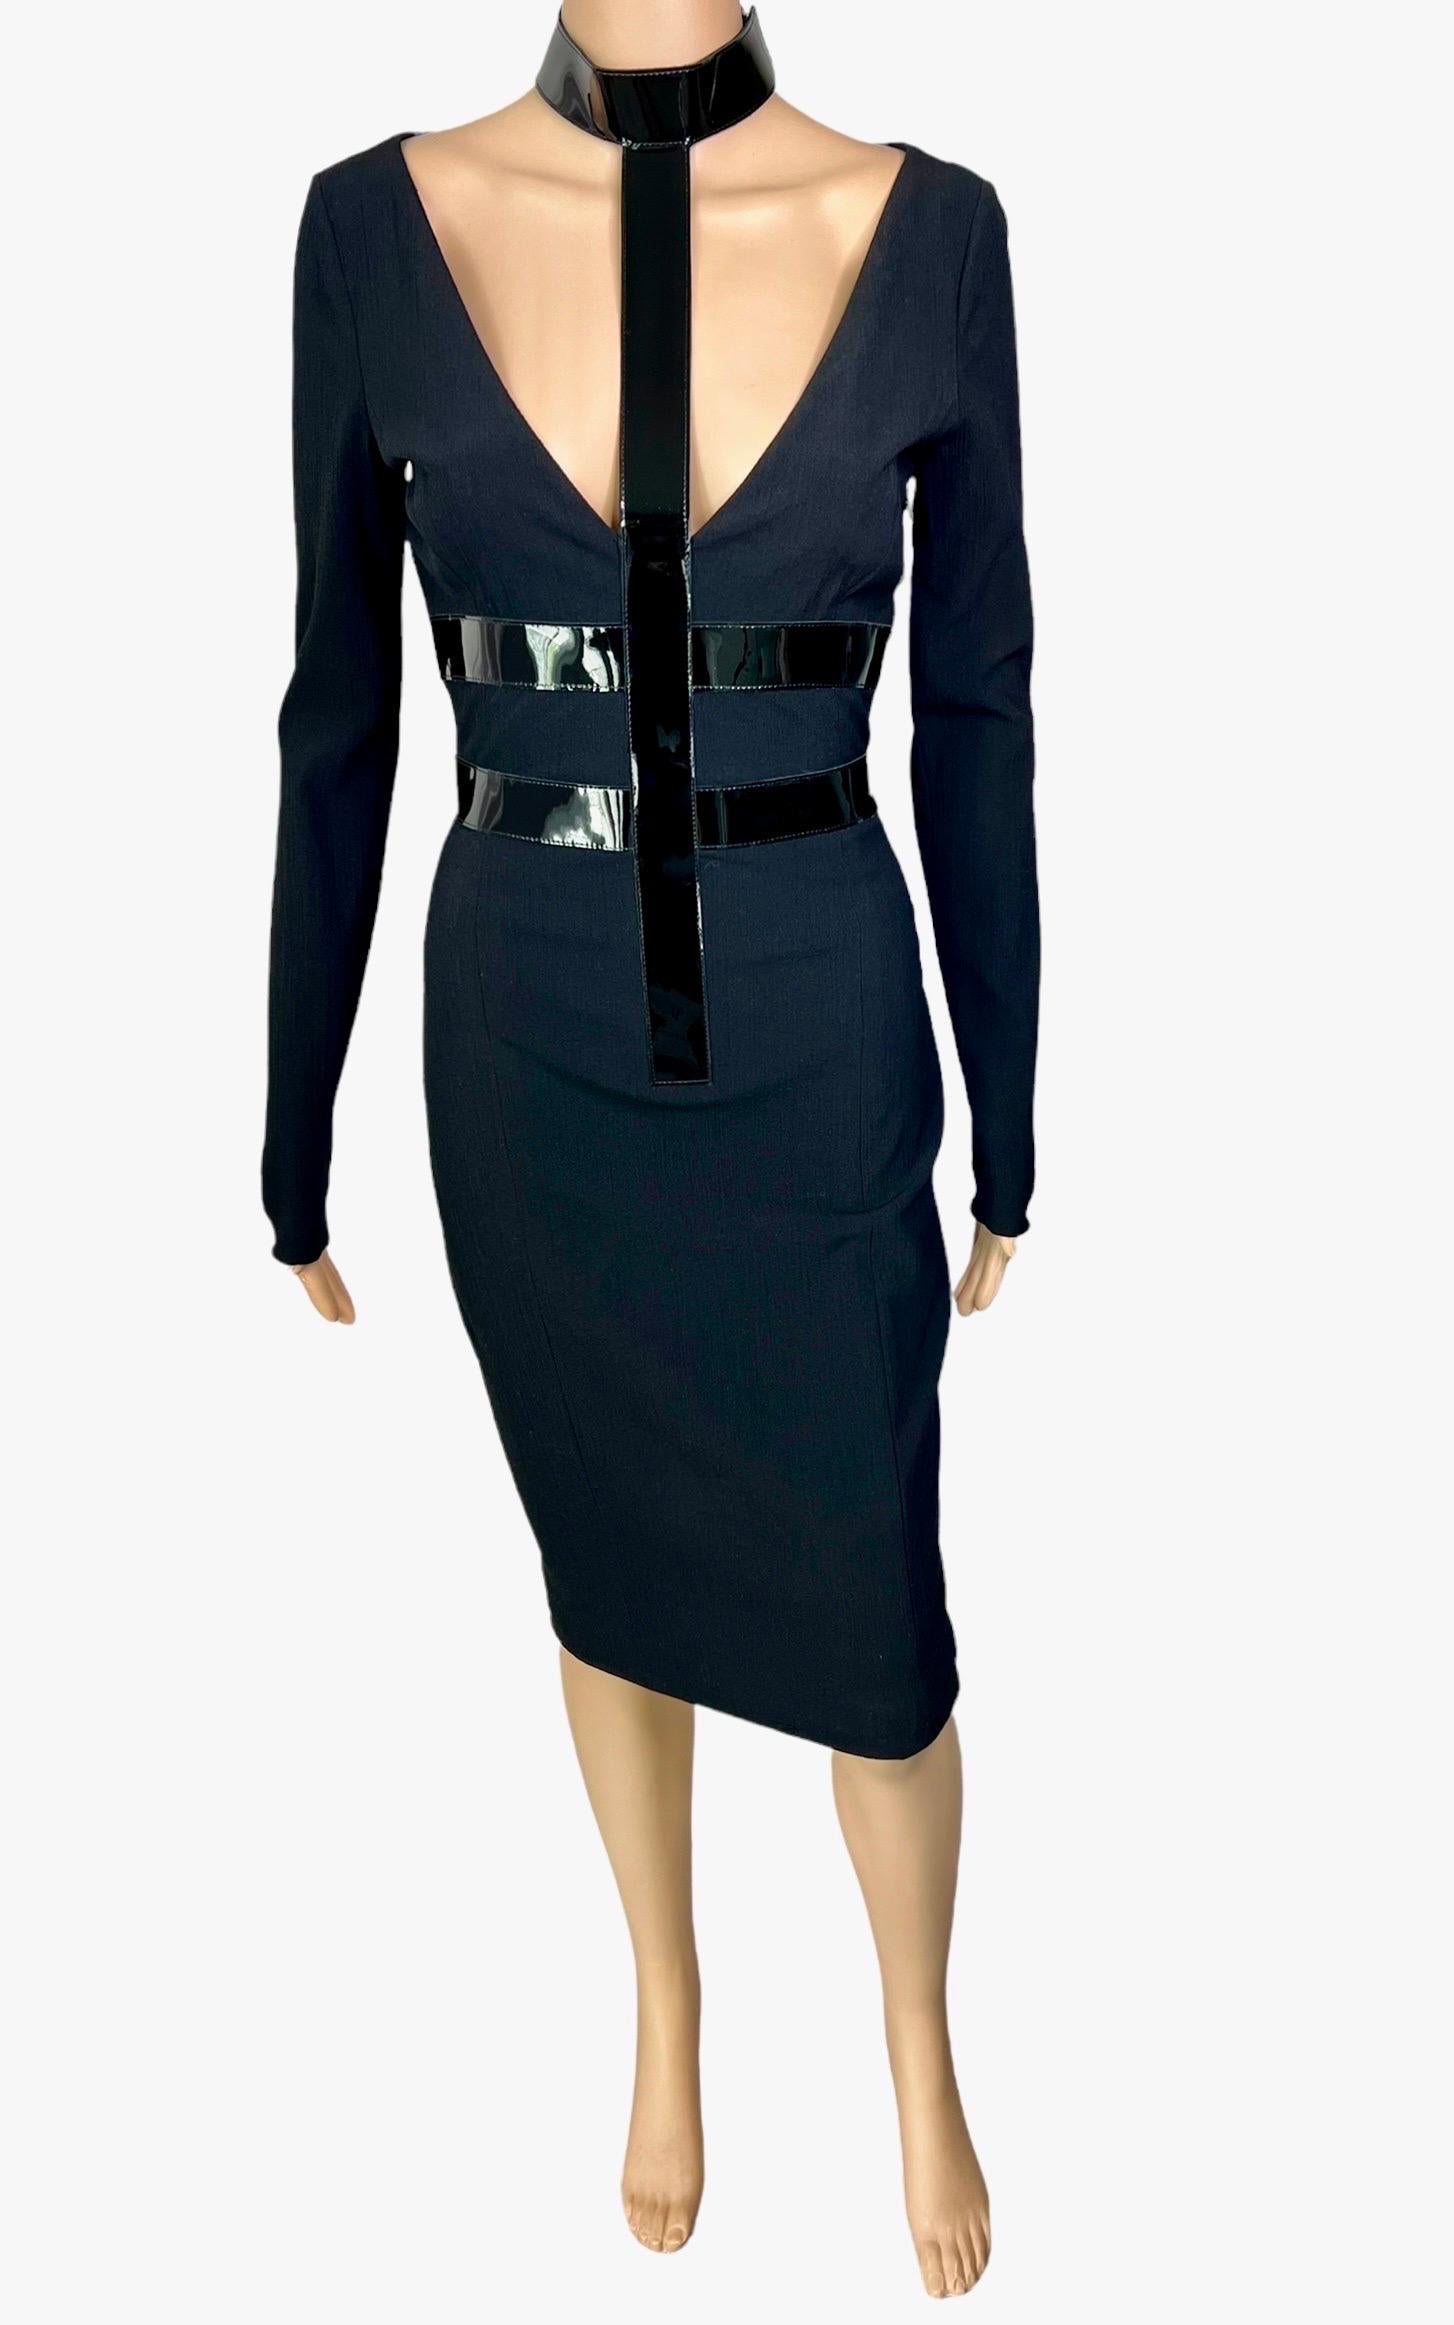 Versace F/W 2013 Bondage Vinyl Collar Plunged Cutout Black Dress Size IT 38

